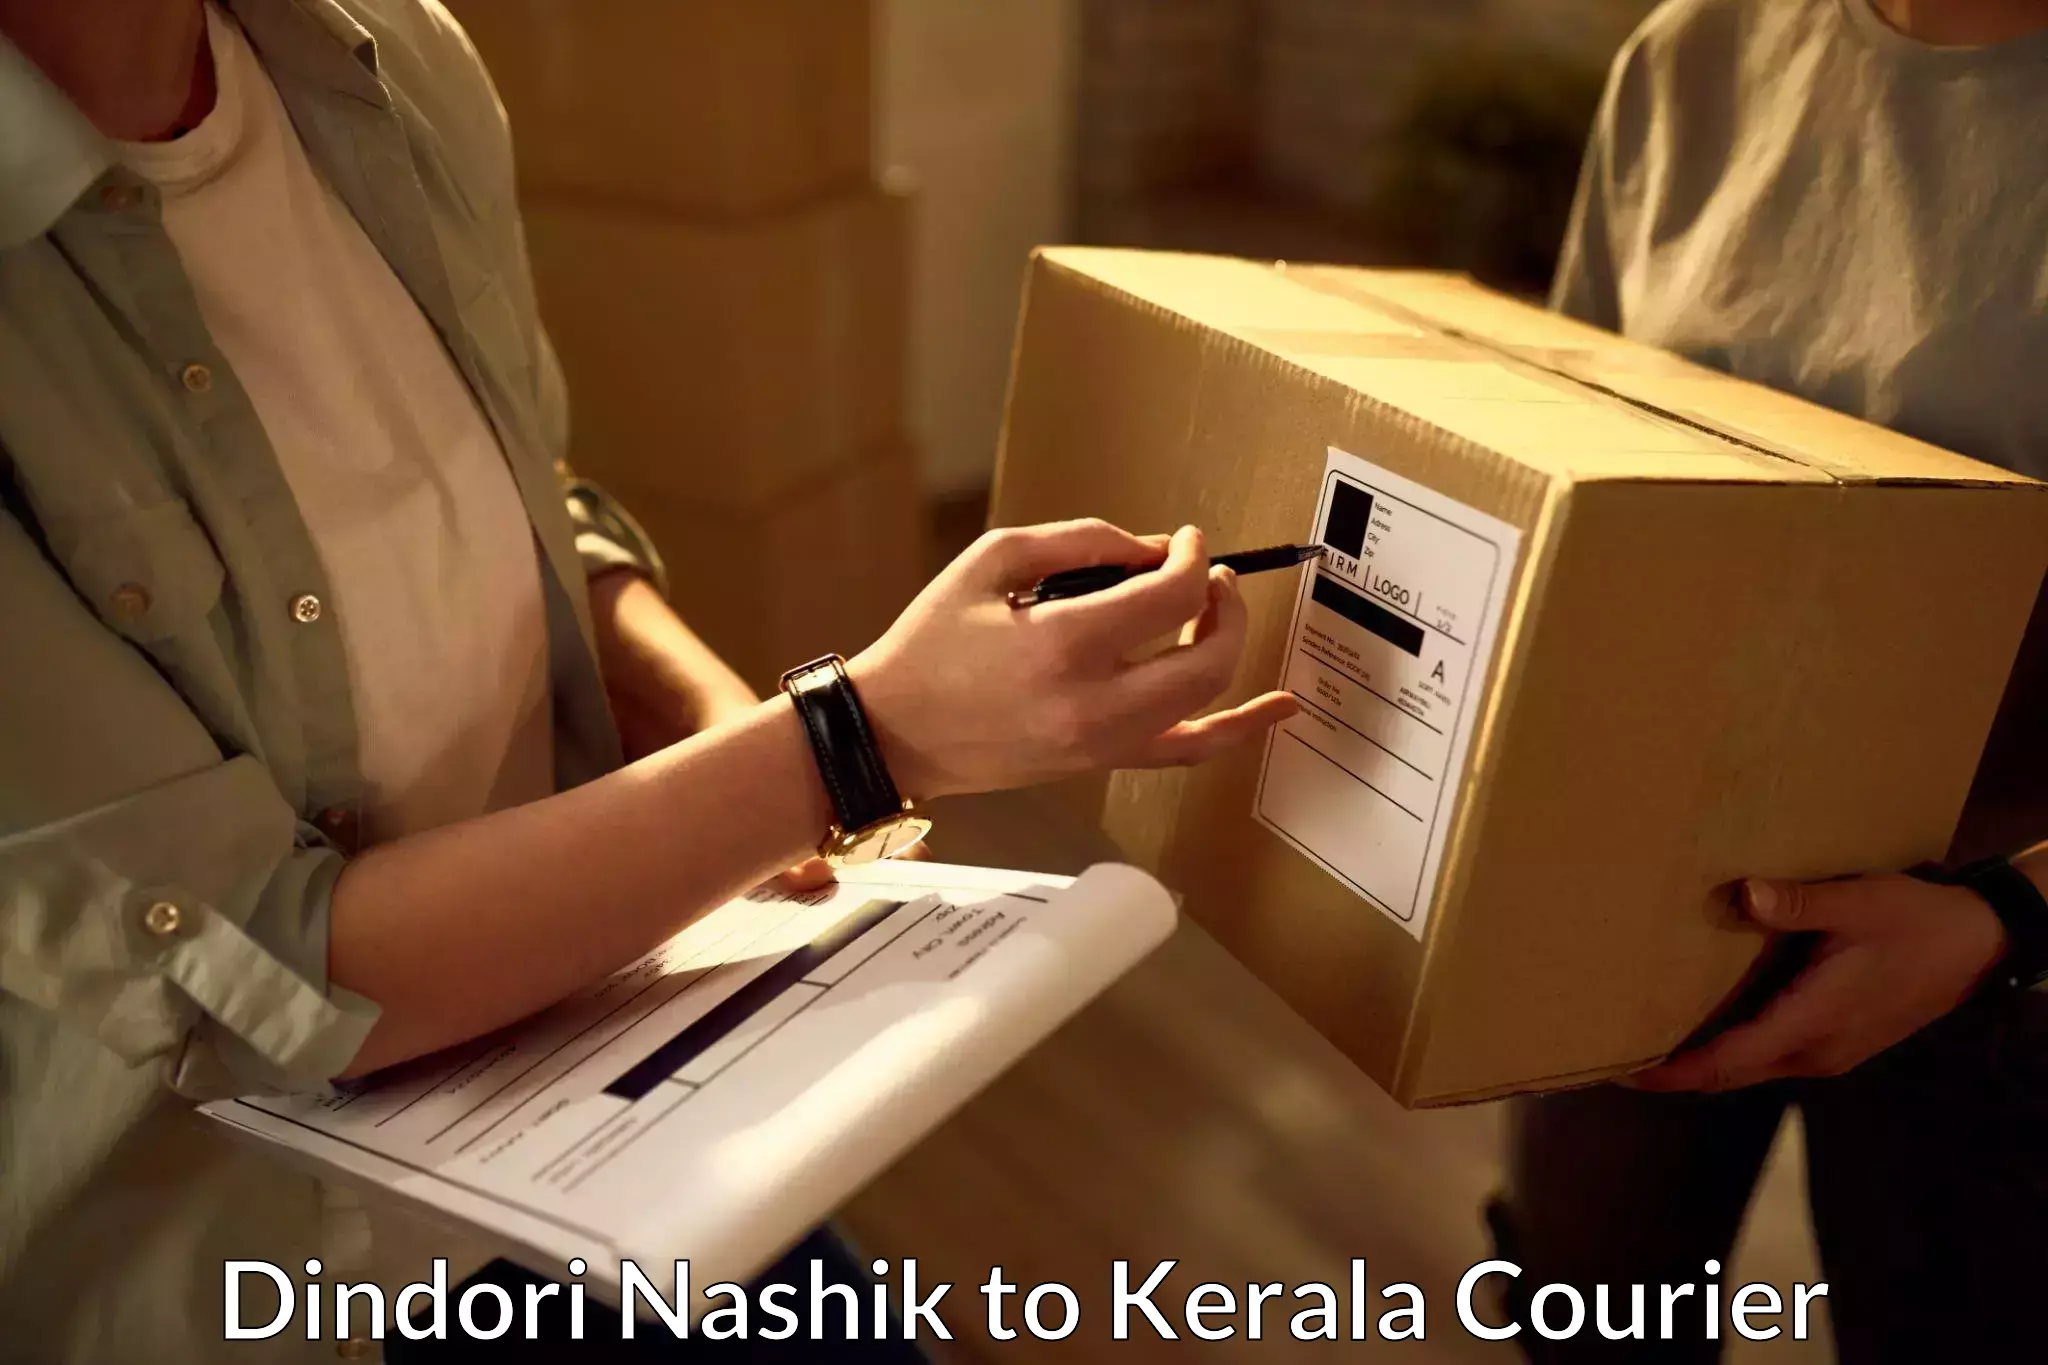 Affordable parcel service Dindori Nashik to Kerala